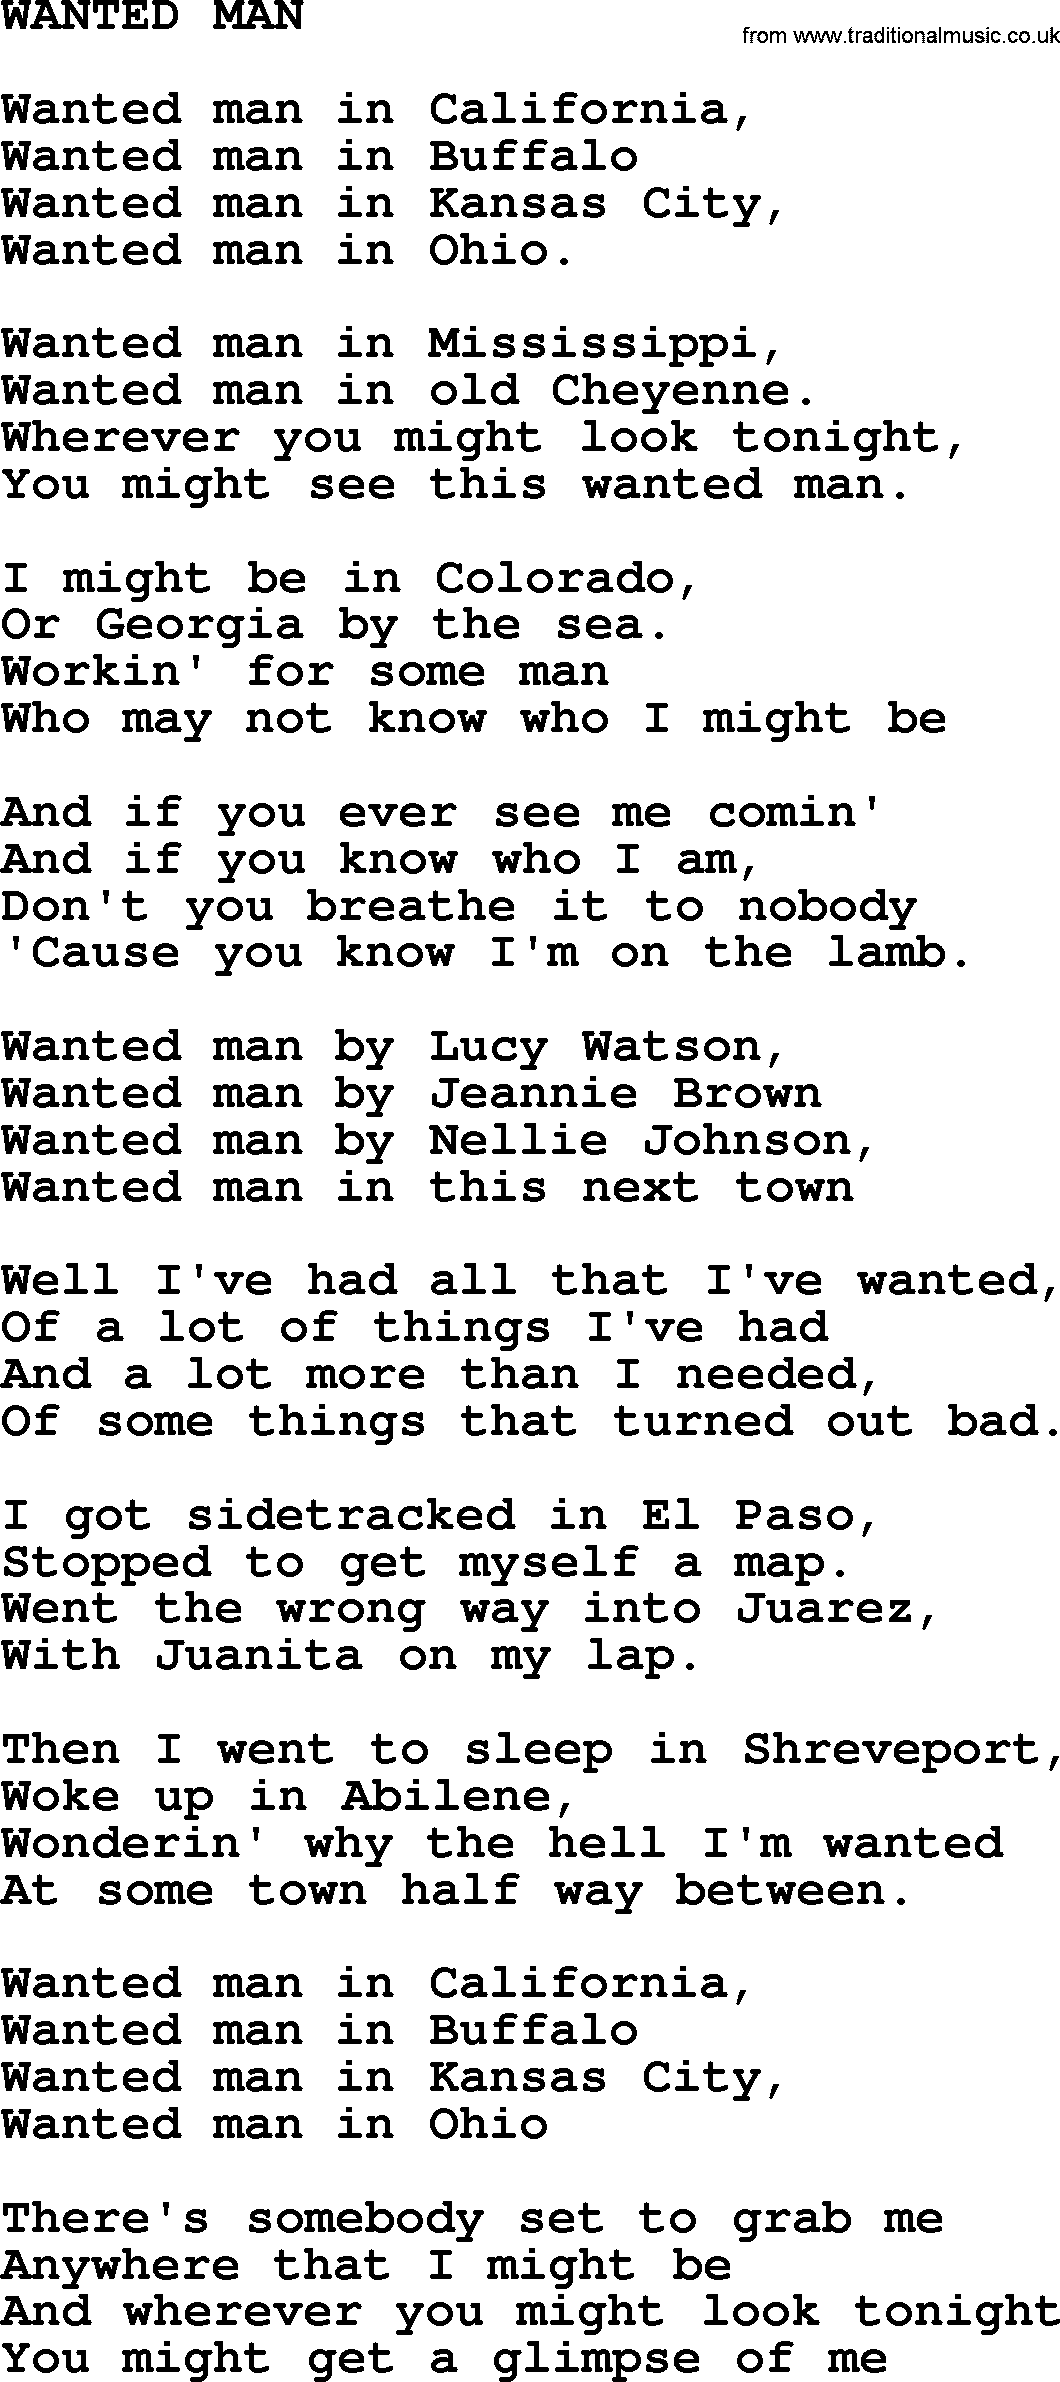 Johnny Cash song Wanted Man.txt lyrics